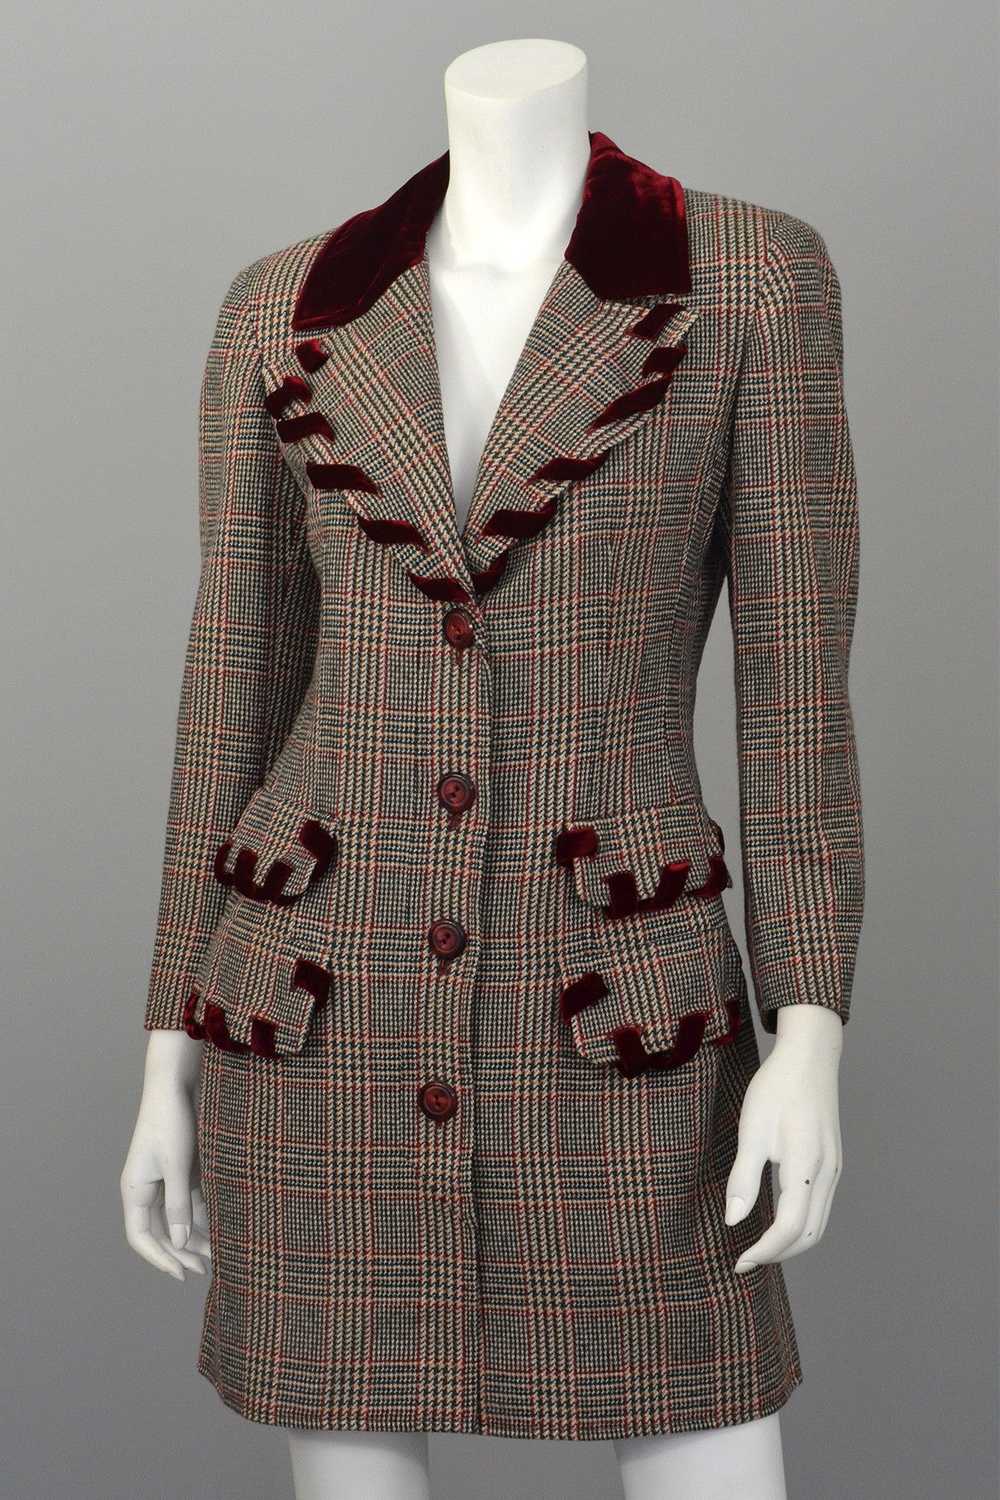 Valentino Tweed Riding Jacket - image 5